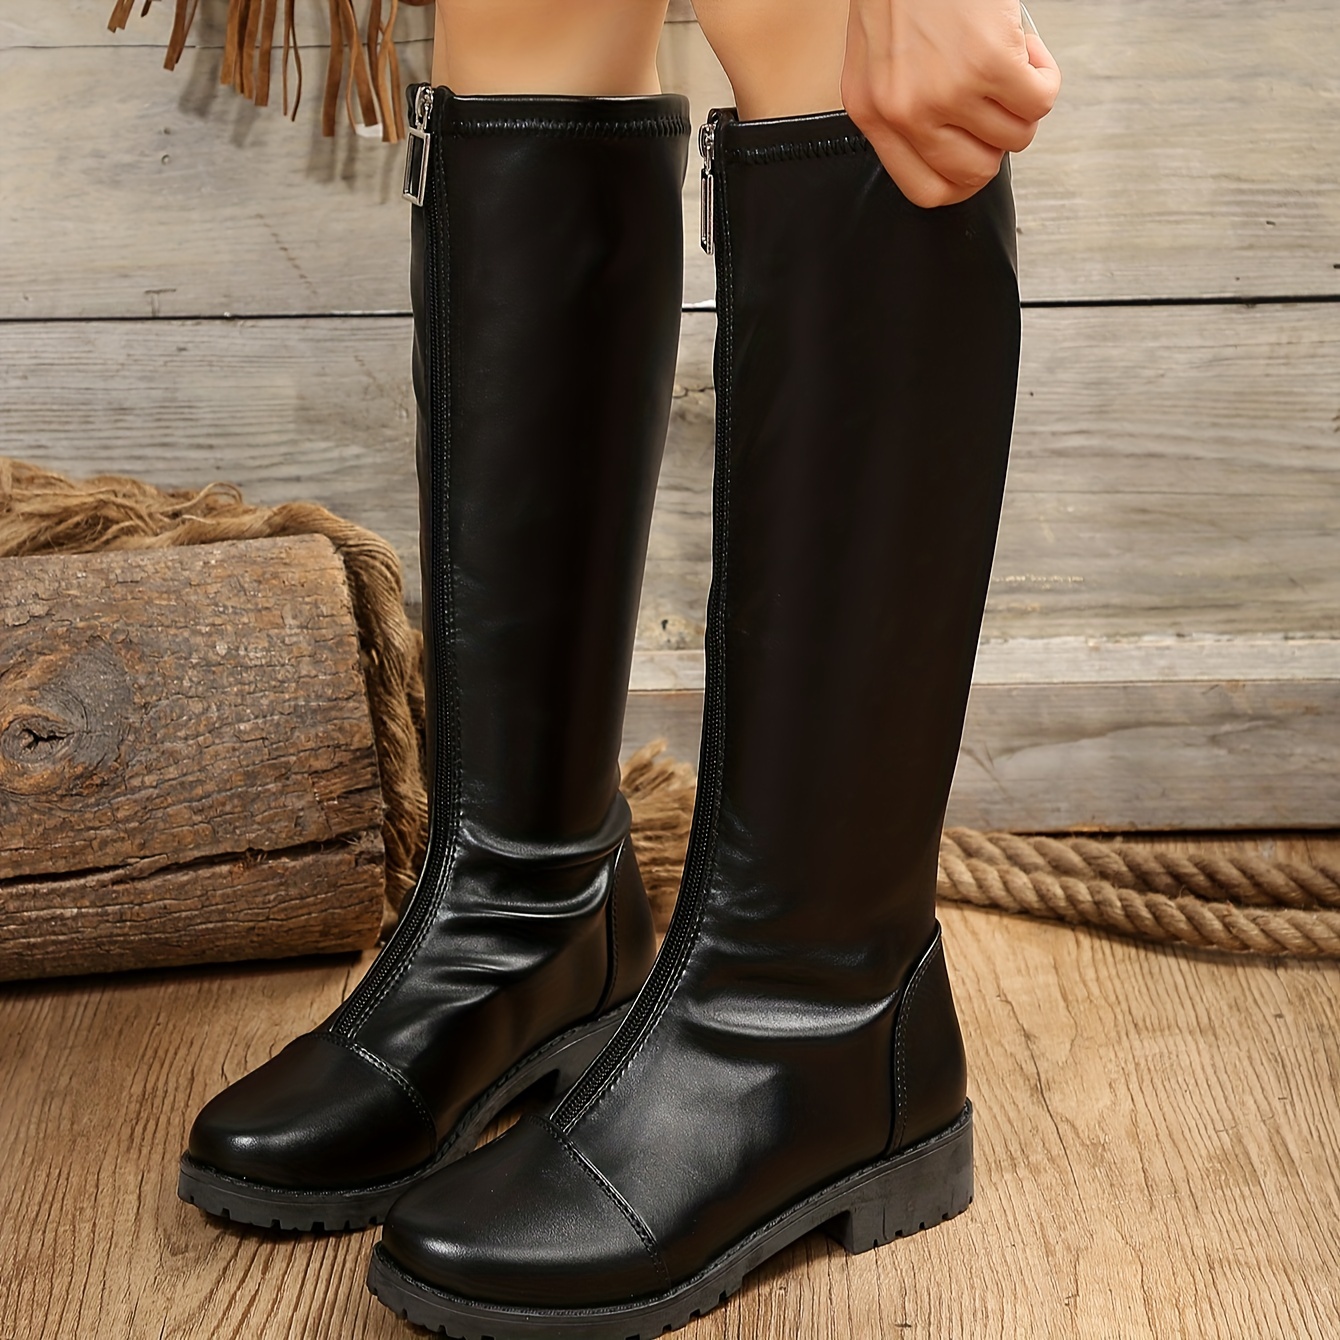 Women's Front Zipper Long Boots match Faux Leather Knee High